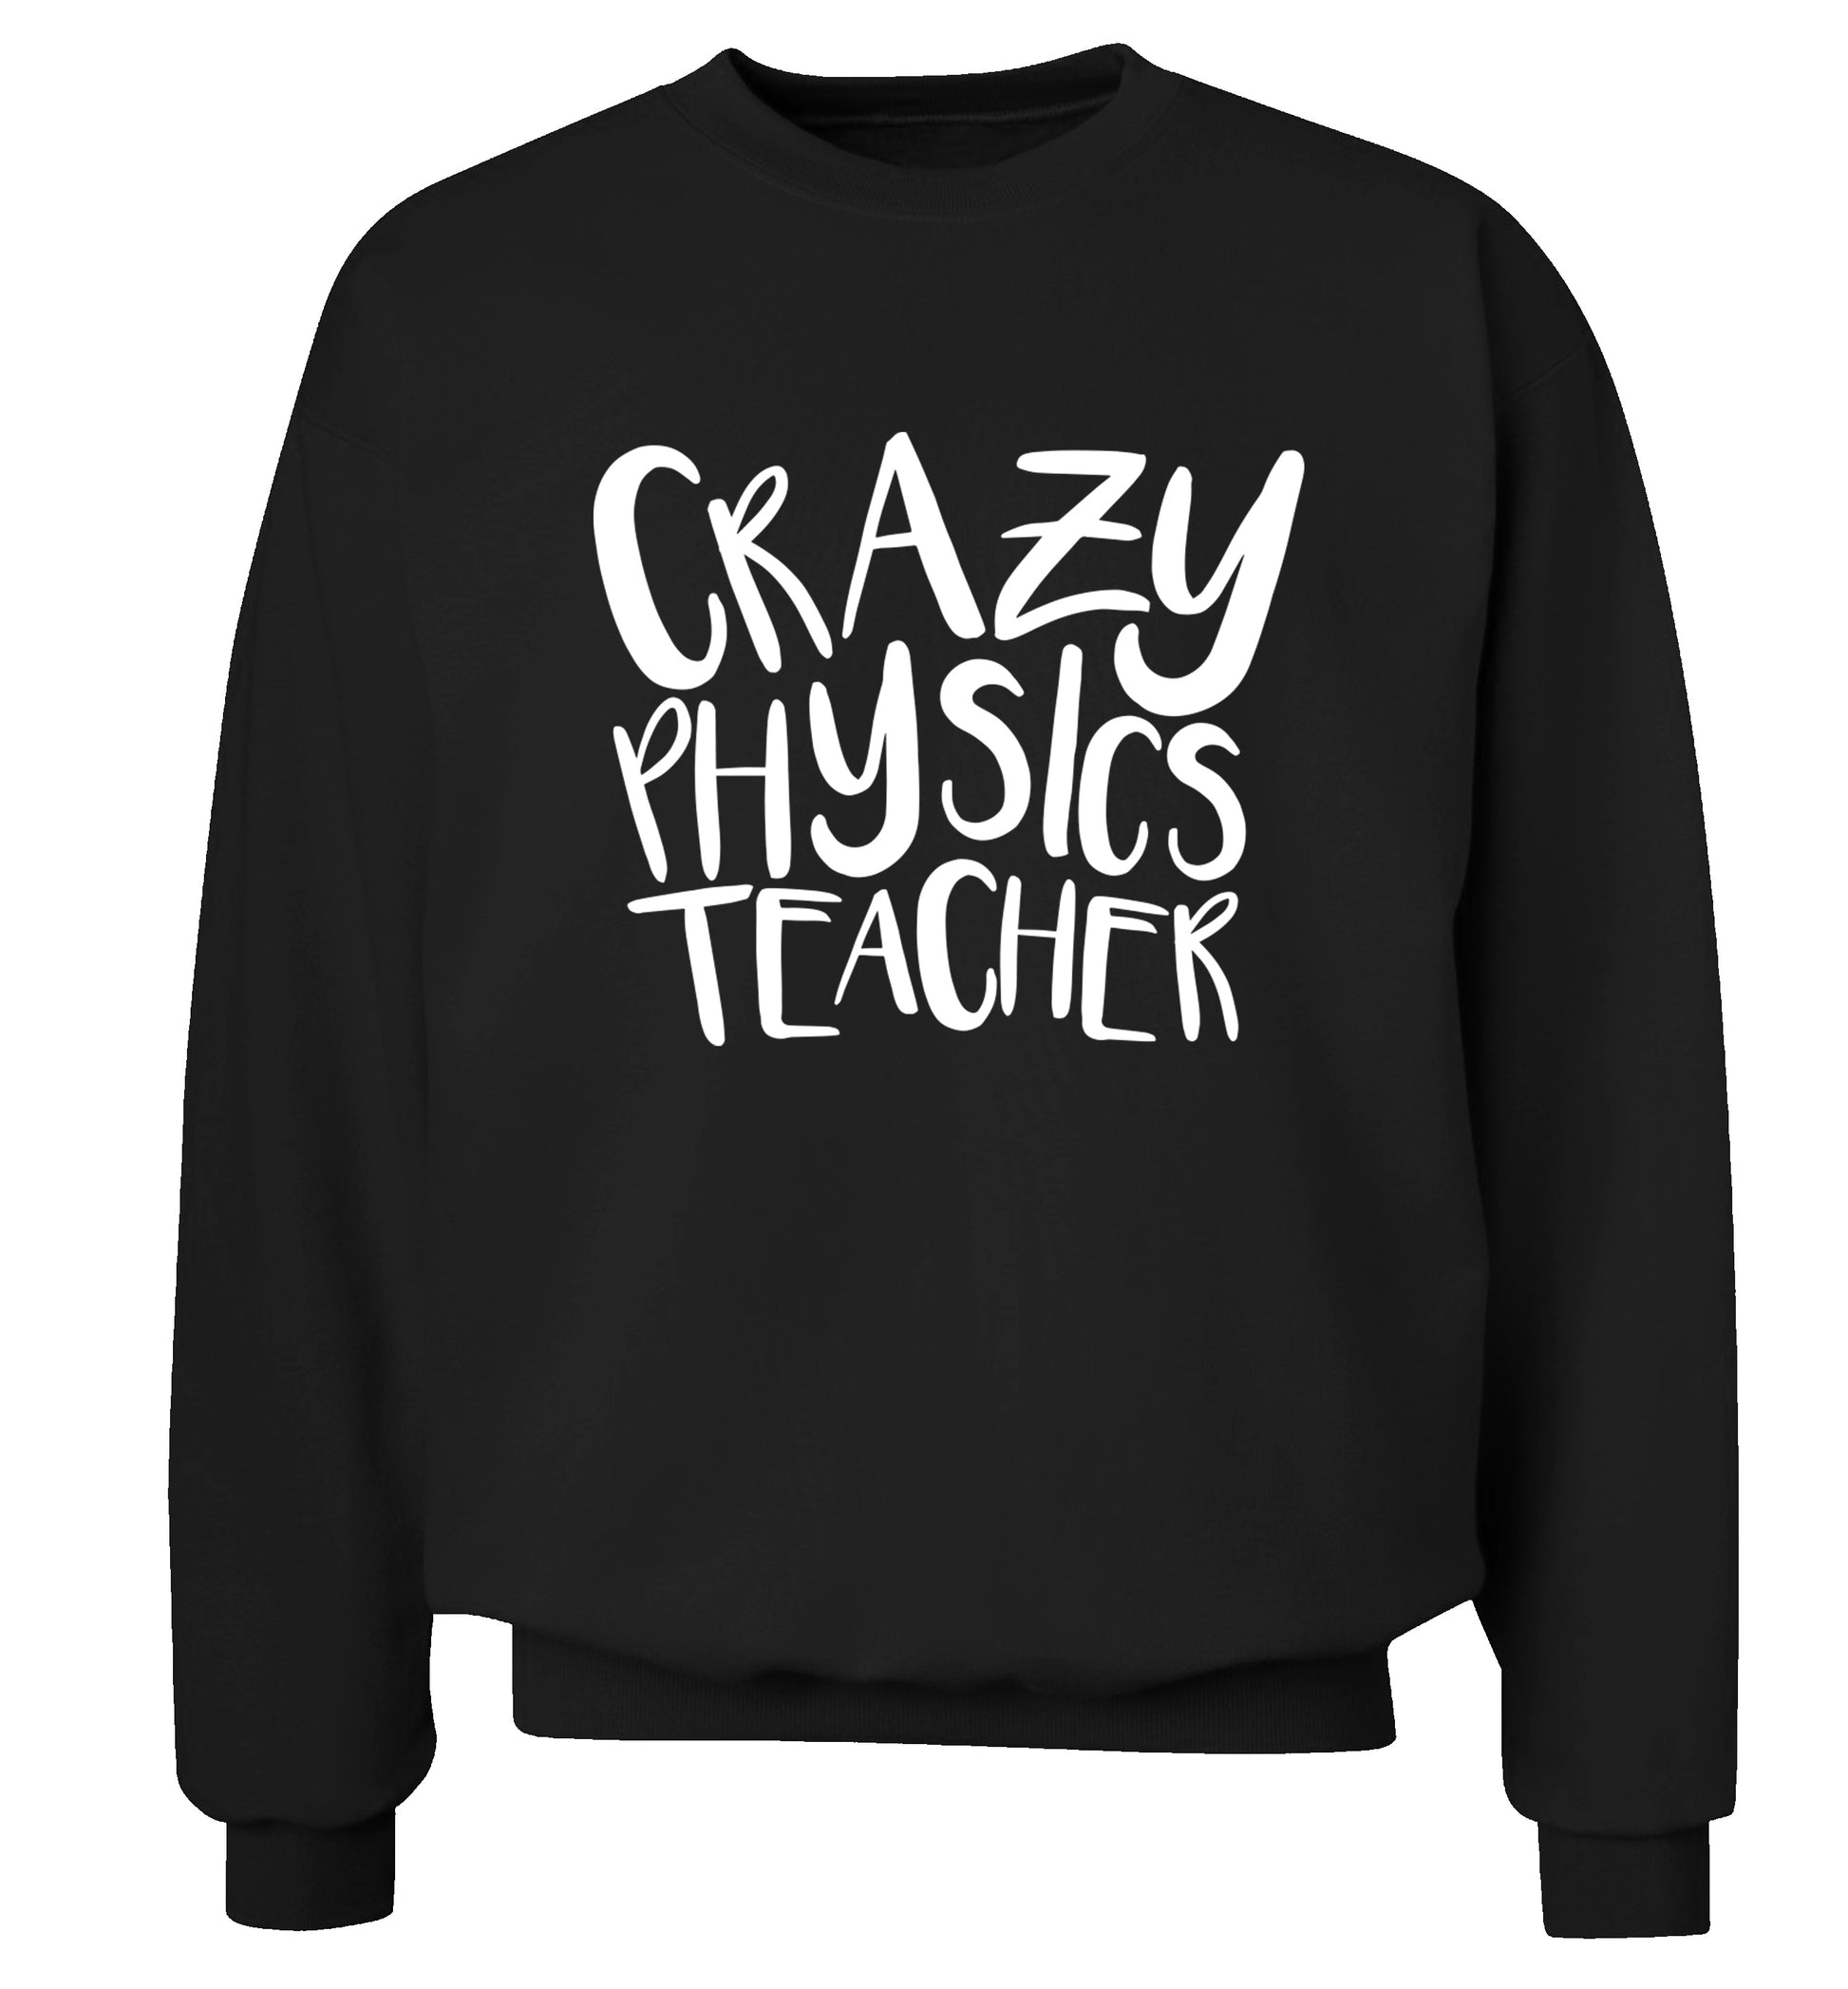 Crazy physics teacher Adult's unisex black Sweater 2XL